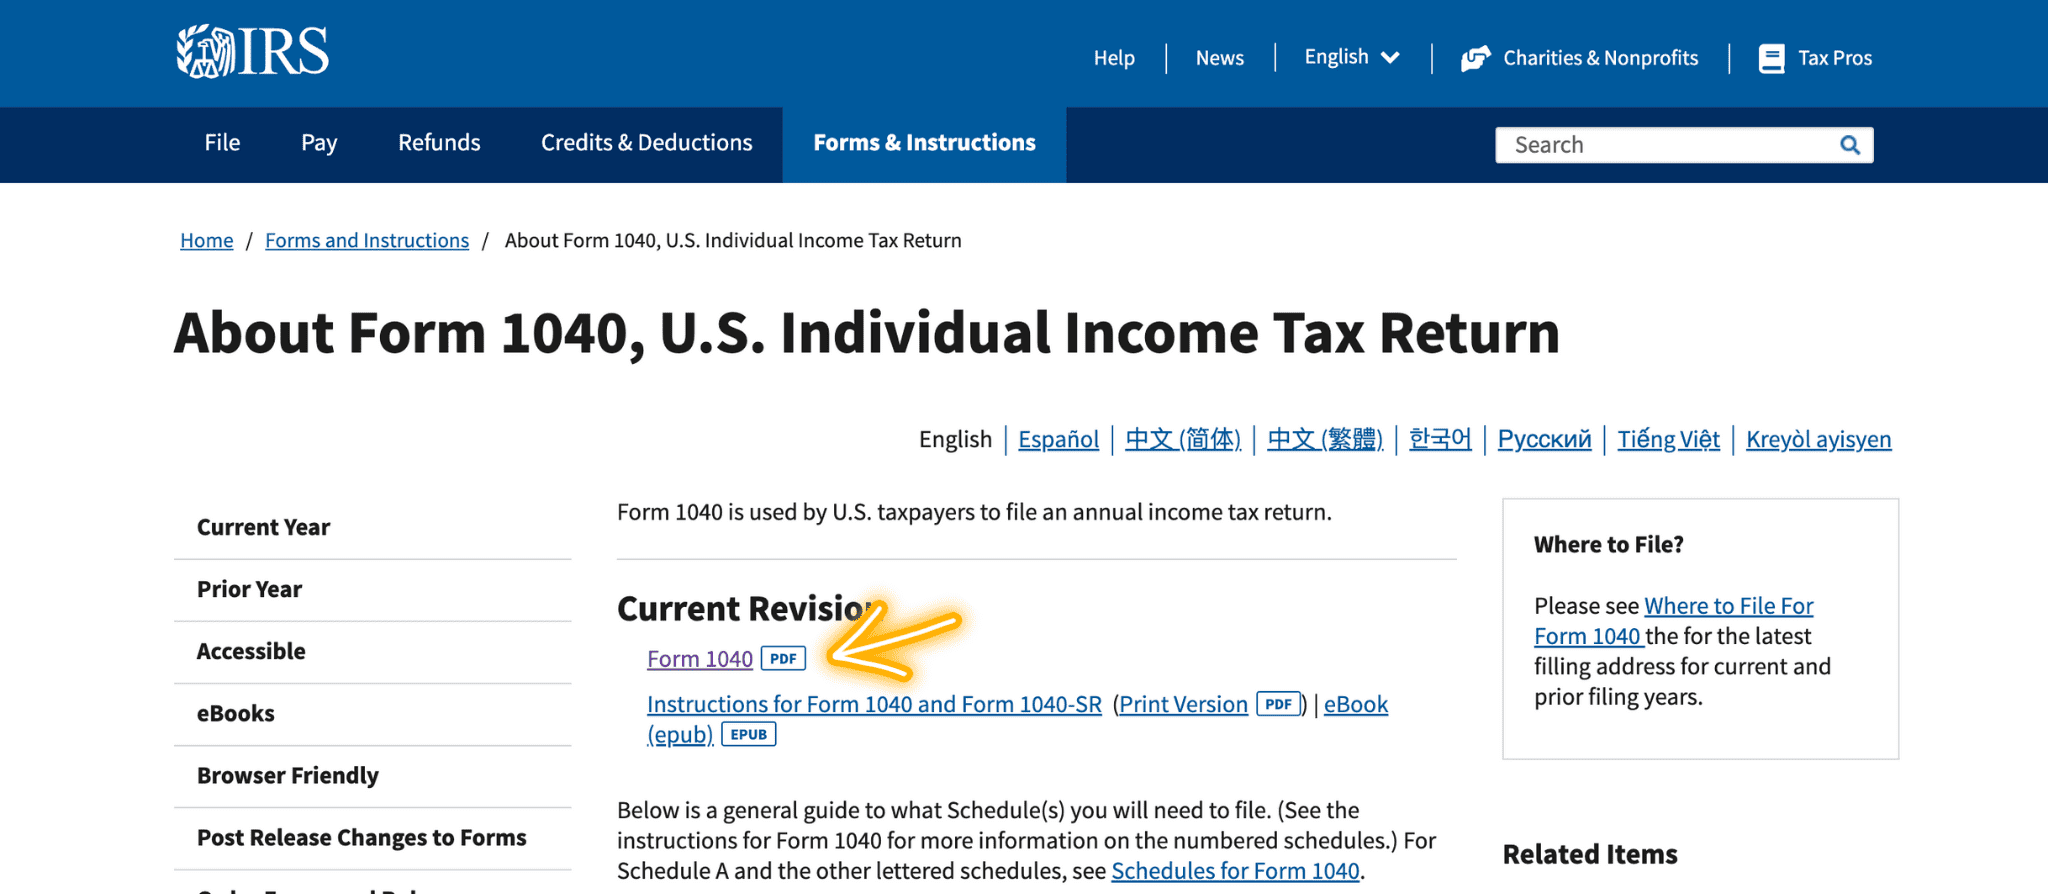 How do I access the 1040 tax form?